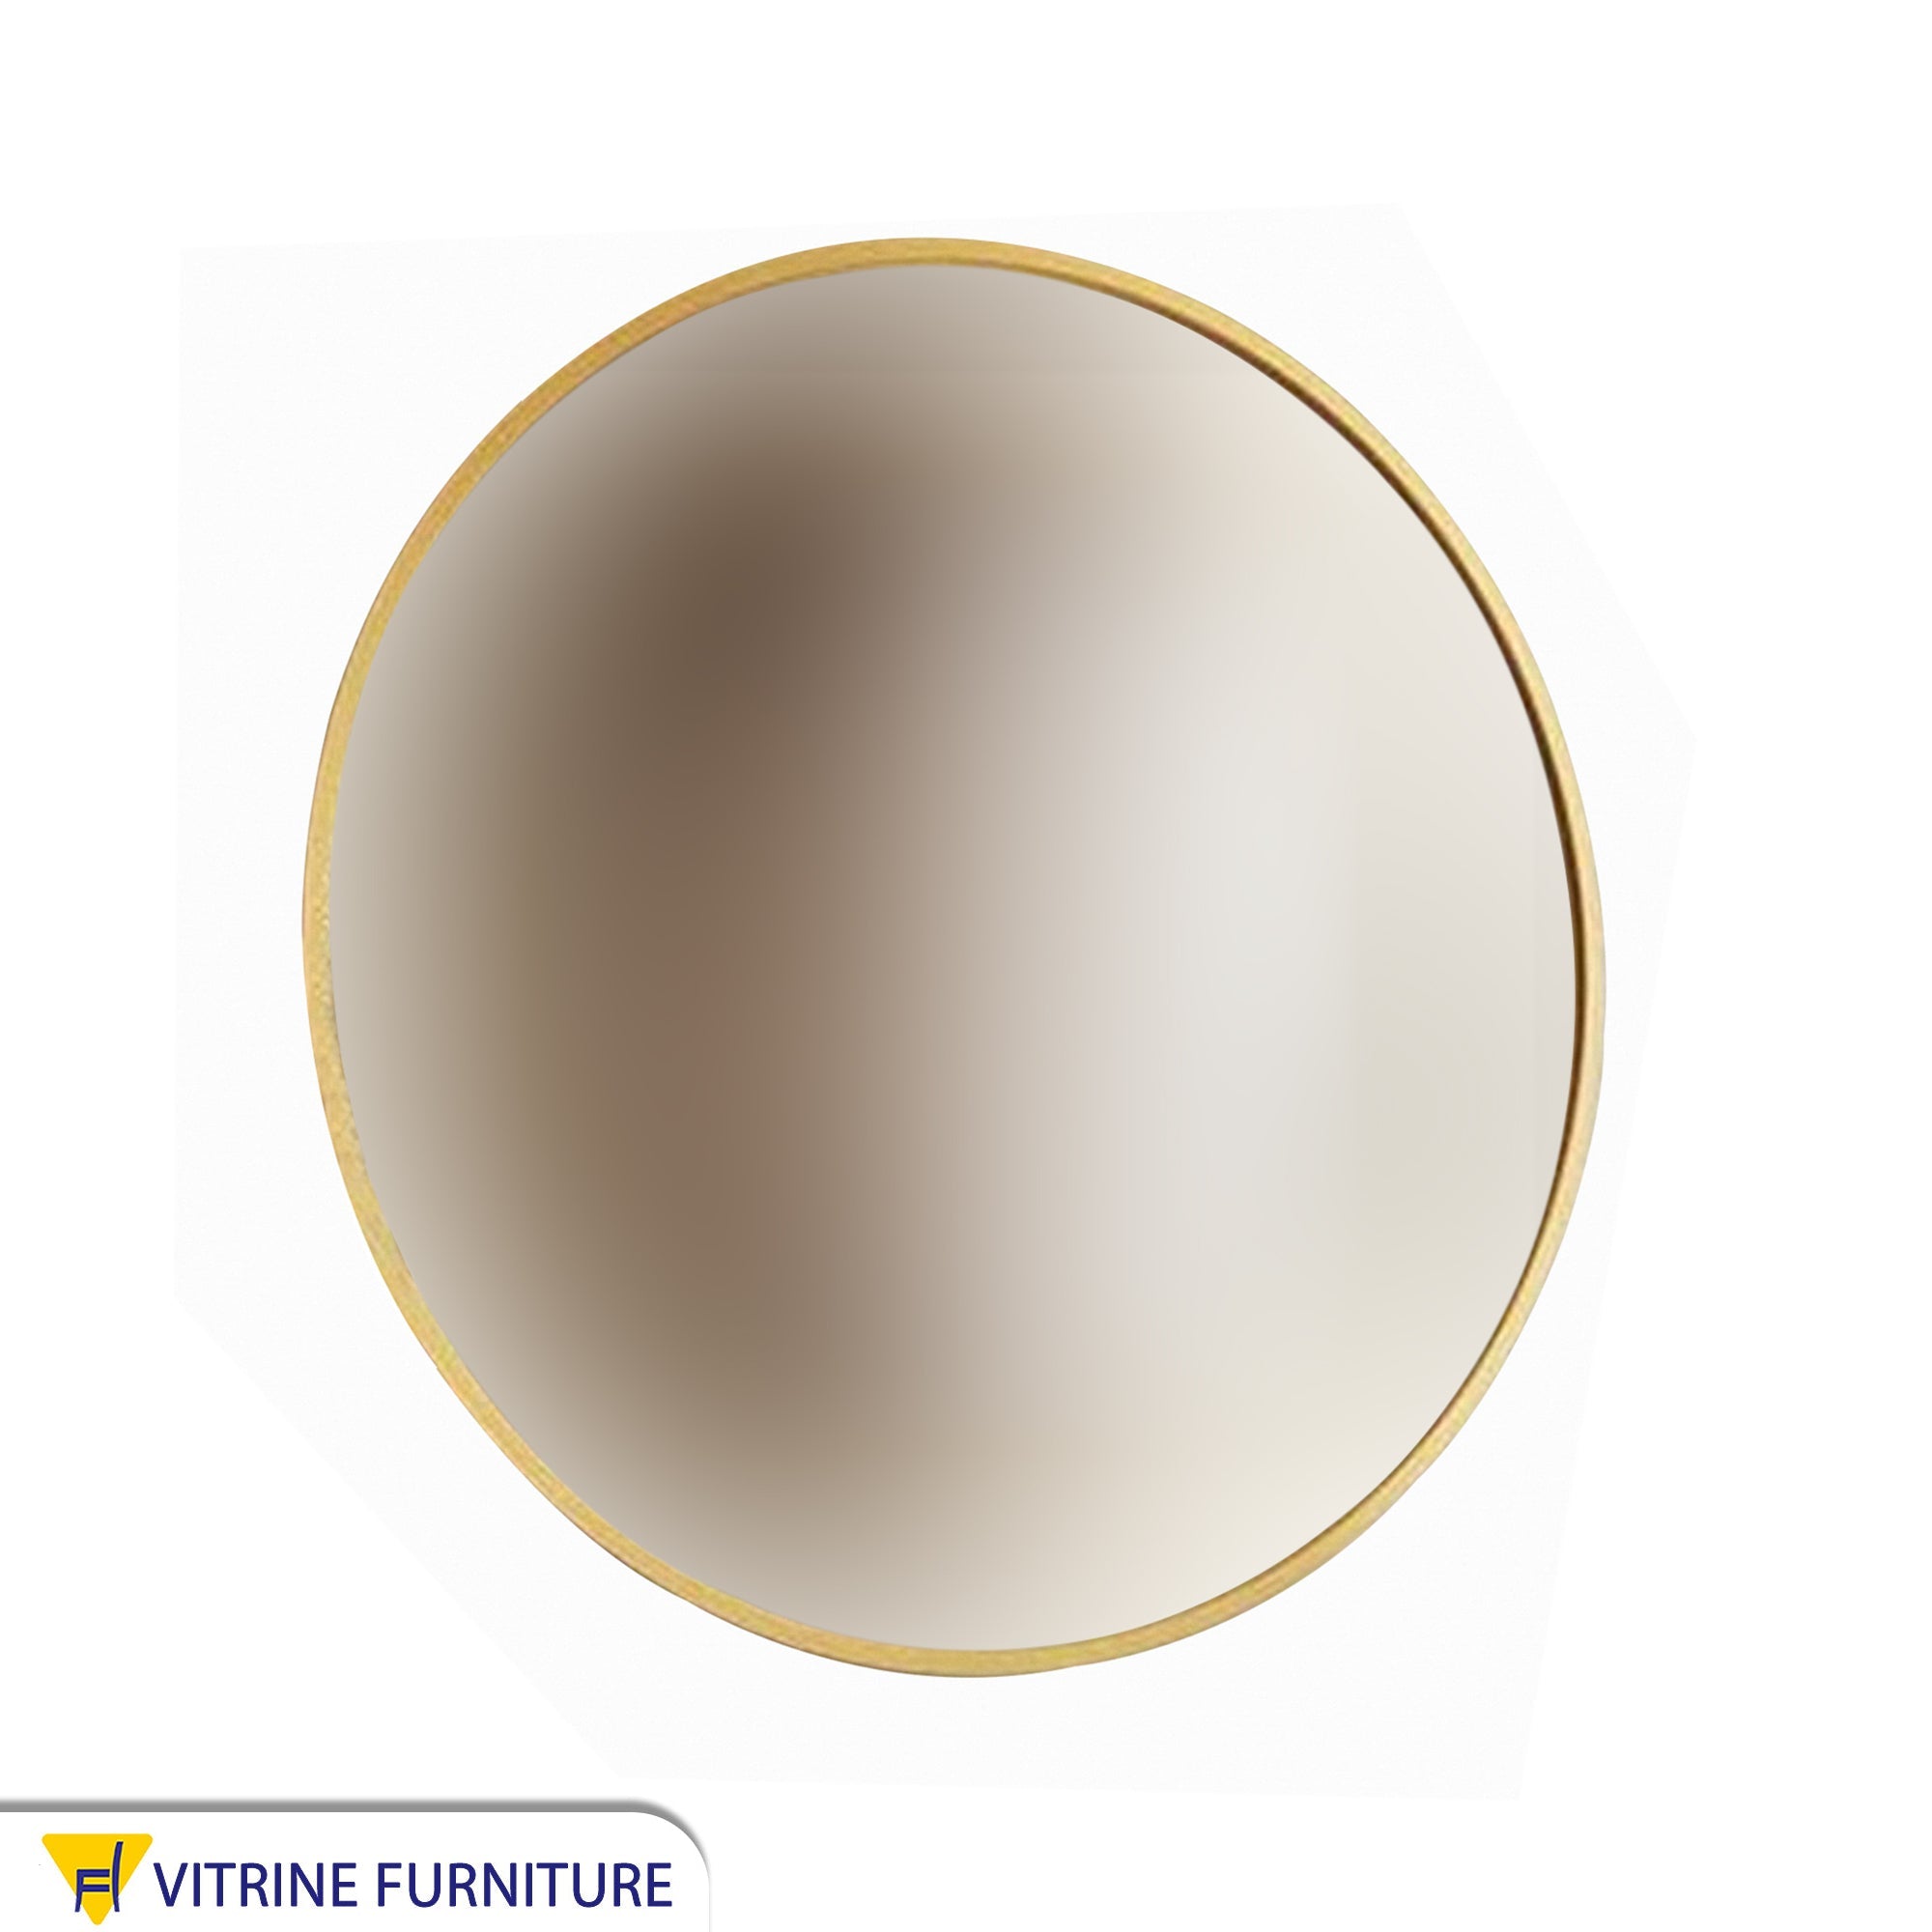 Round mirror, 70 cm in diameter, with a golden wood frame